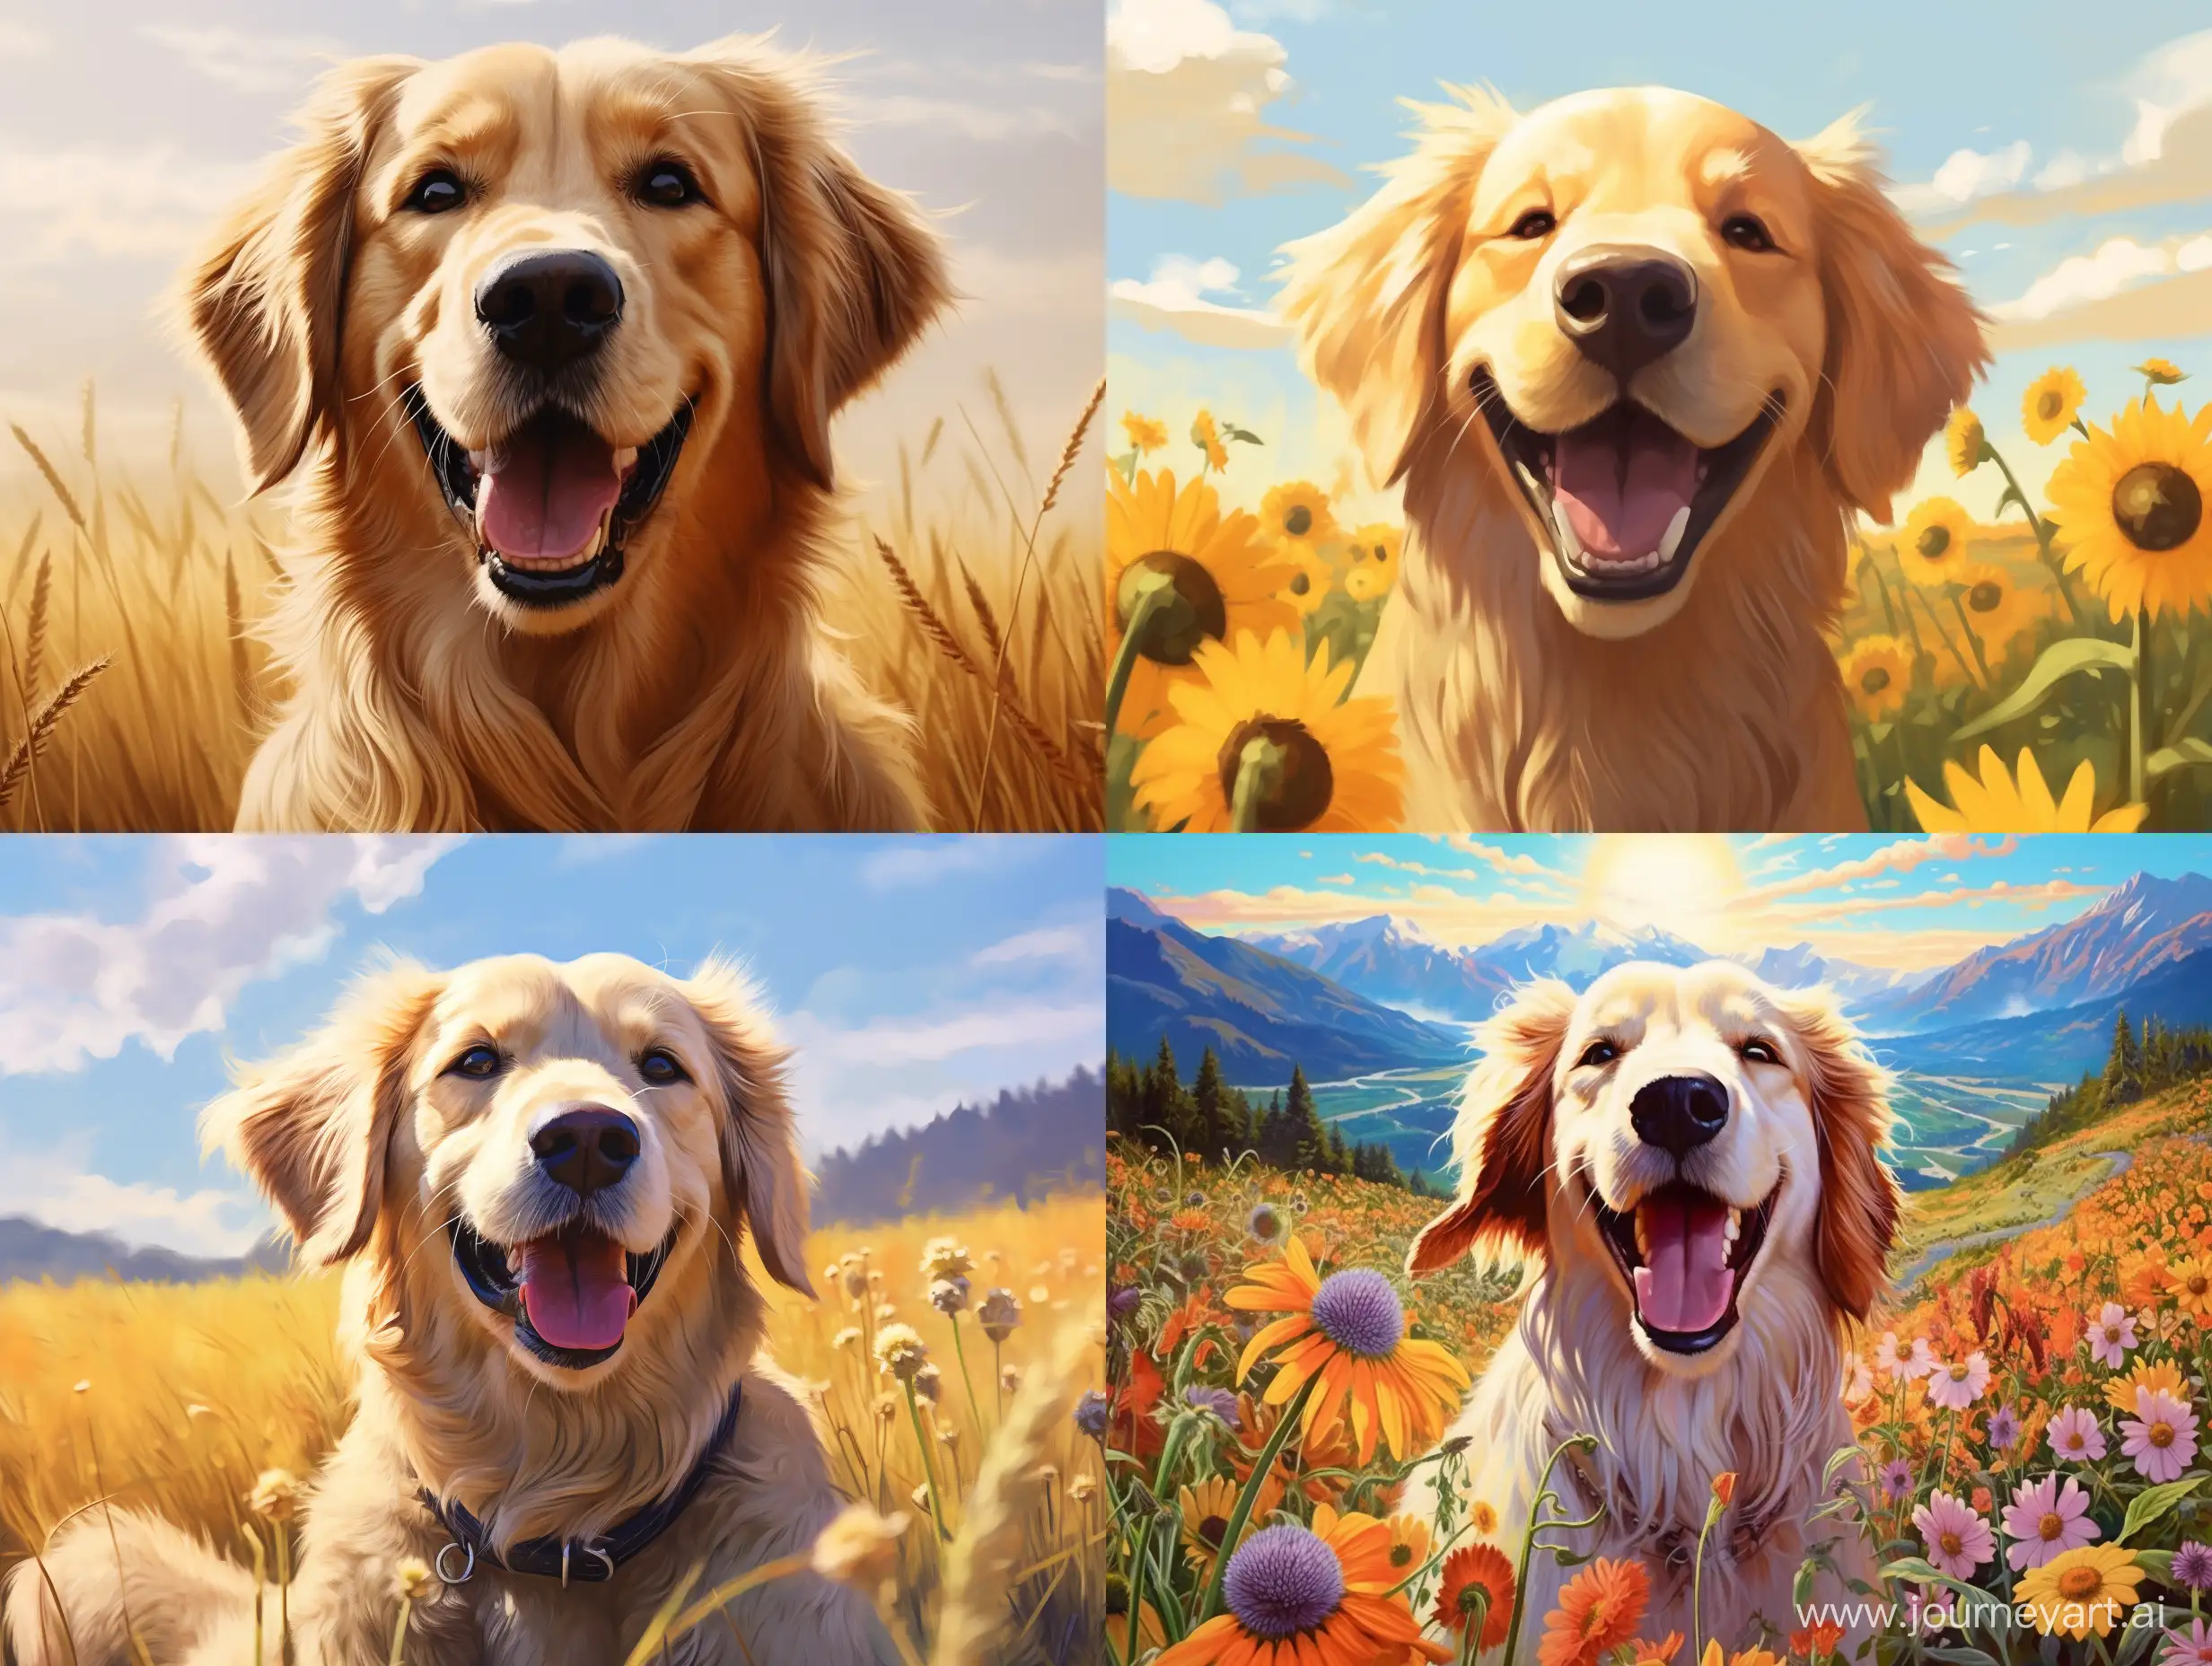 Joyful-Canine-Delight-Happy-Dog-in-Vibrant-43-Aspect-Ratio